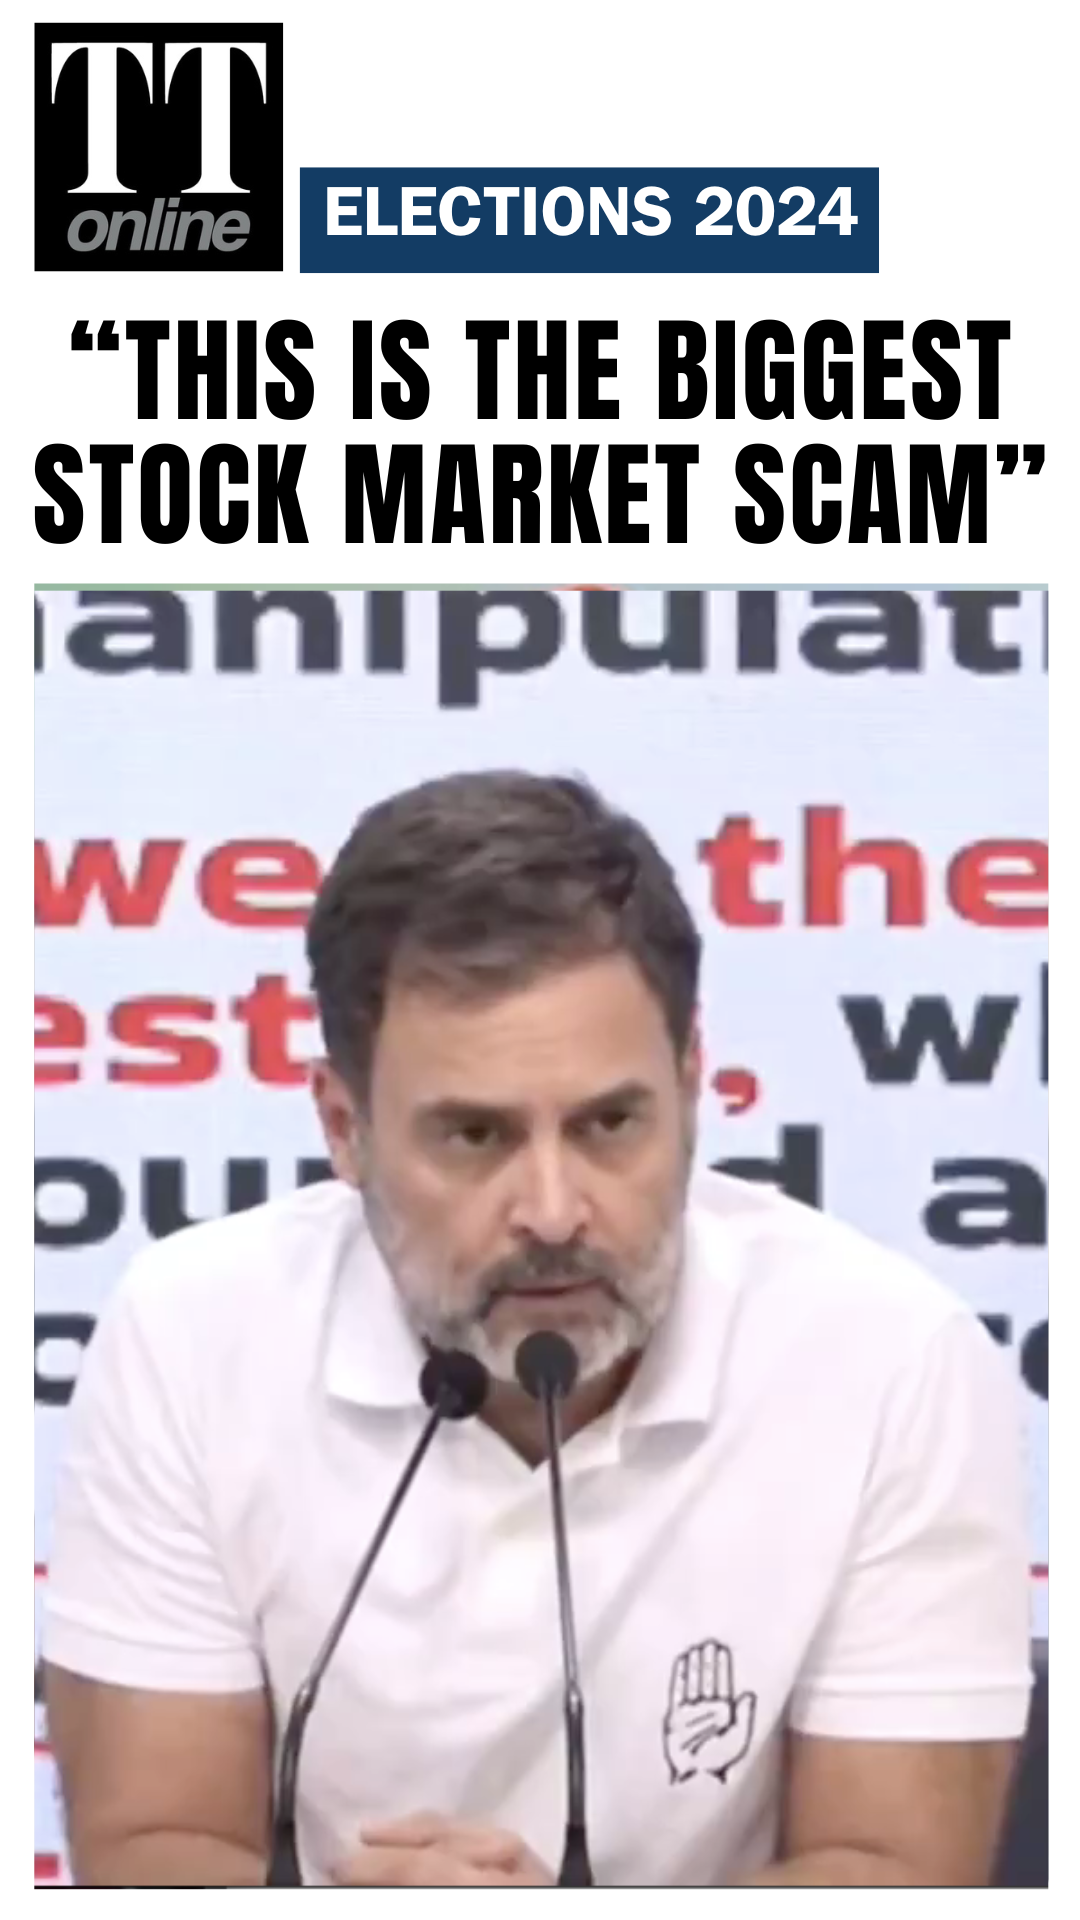 Congress Leader Rahul Gandhi Wants JPC Probe Into "Biggest Stock Market Scam"